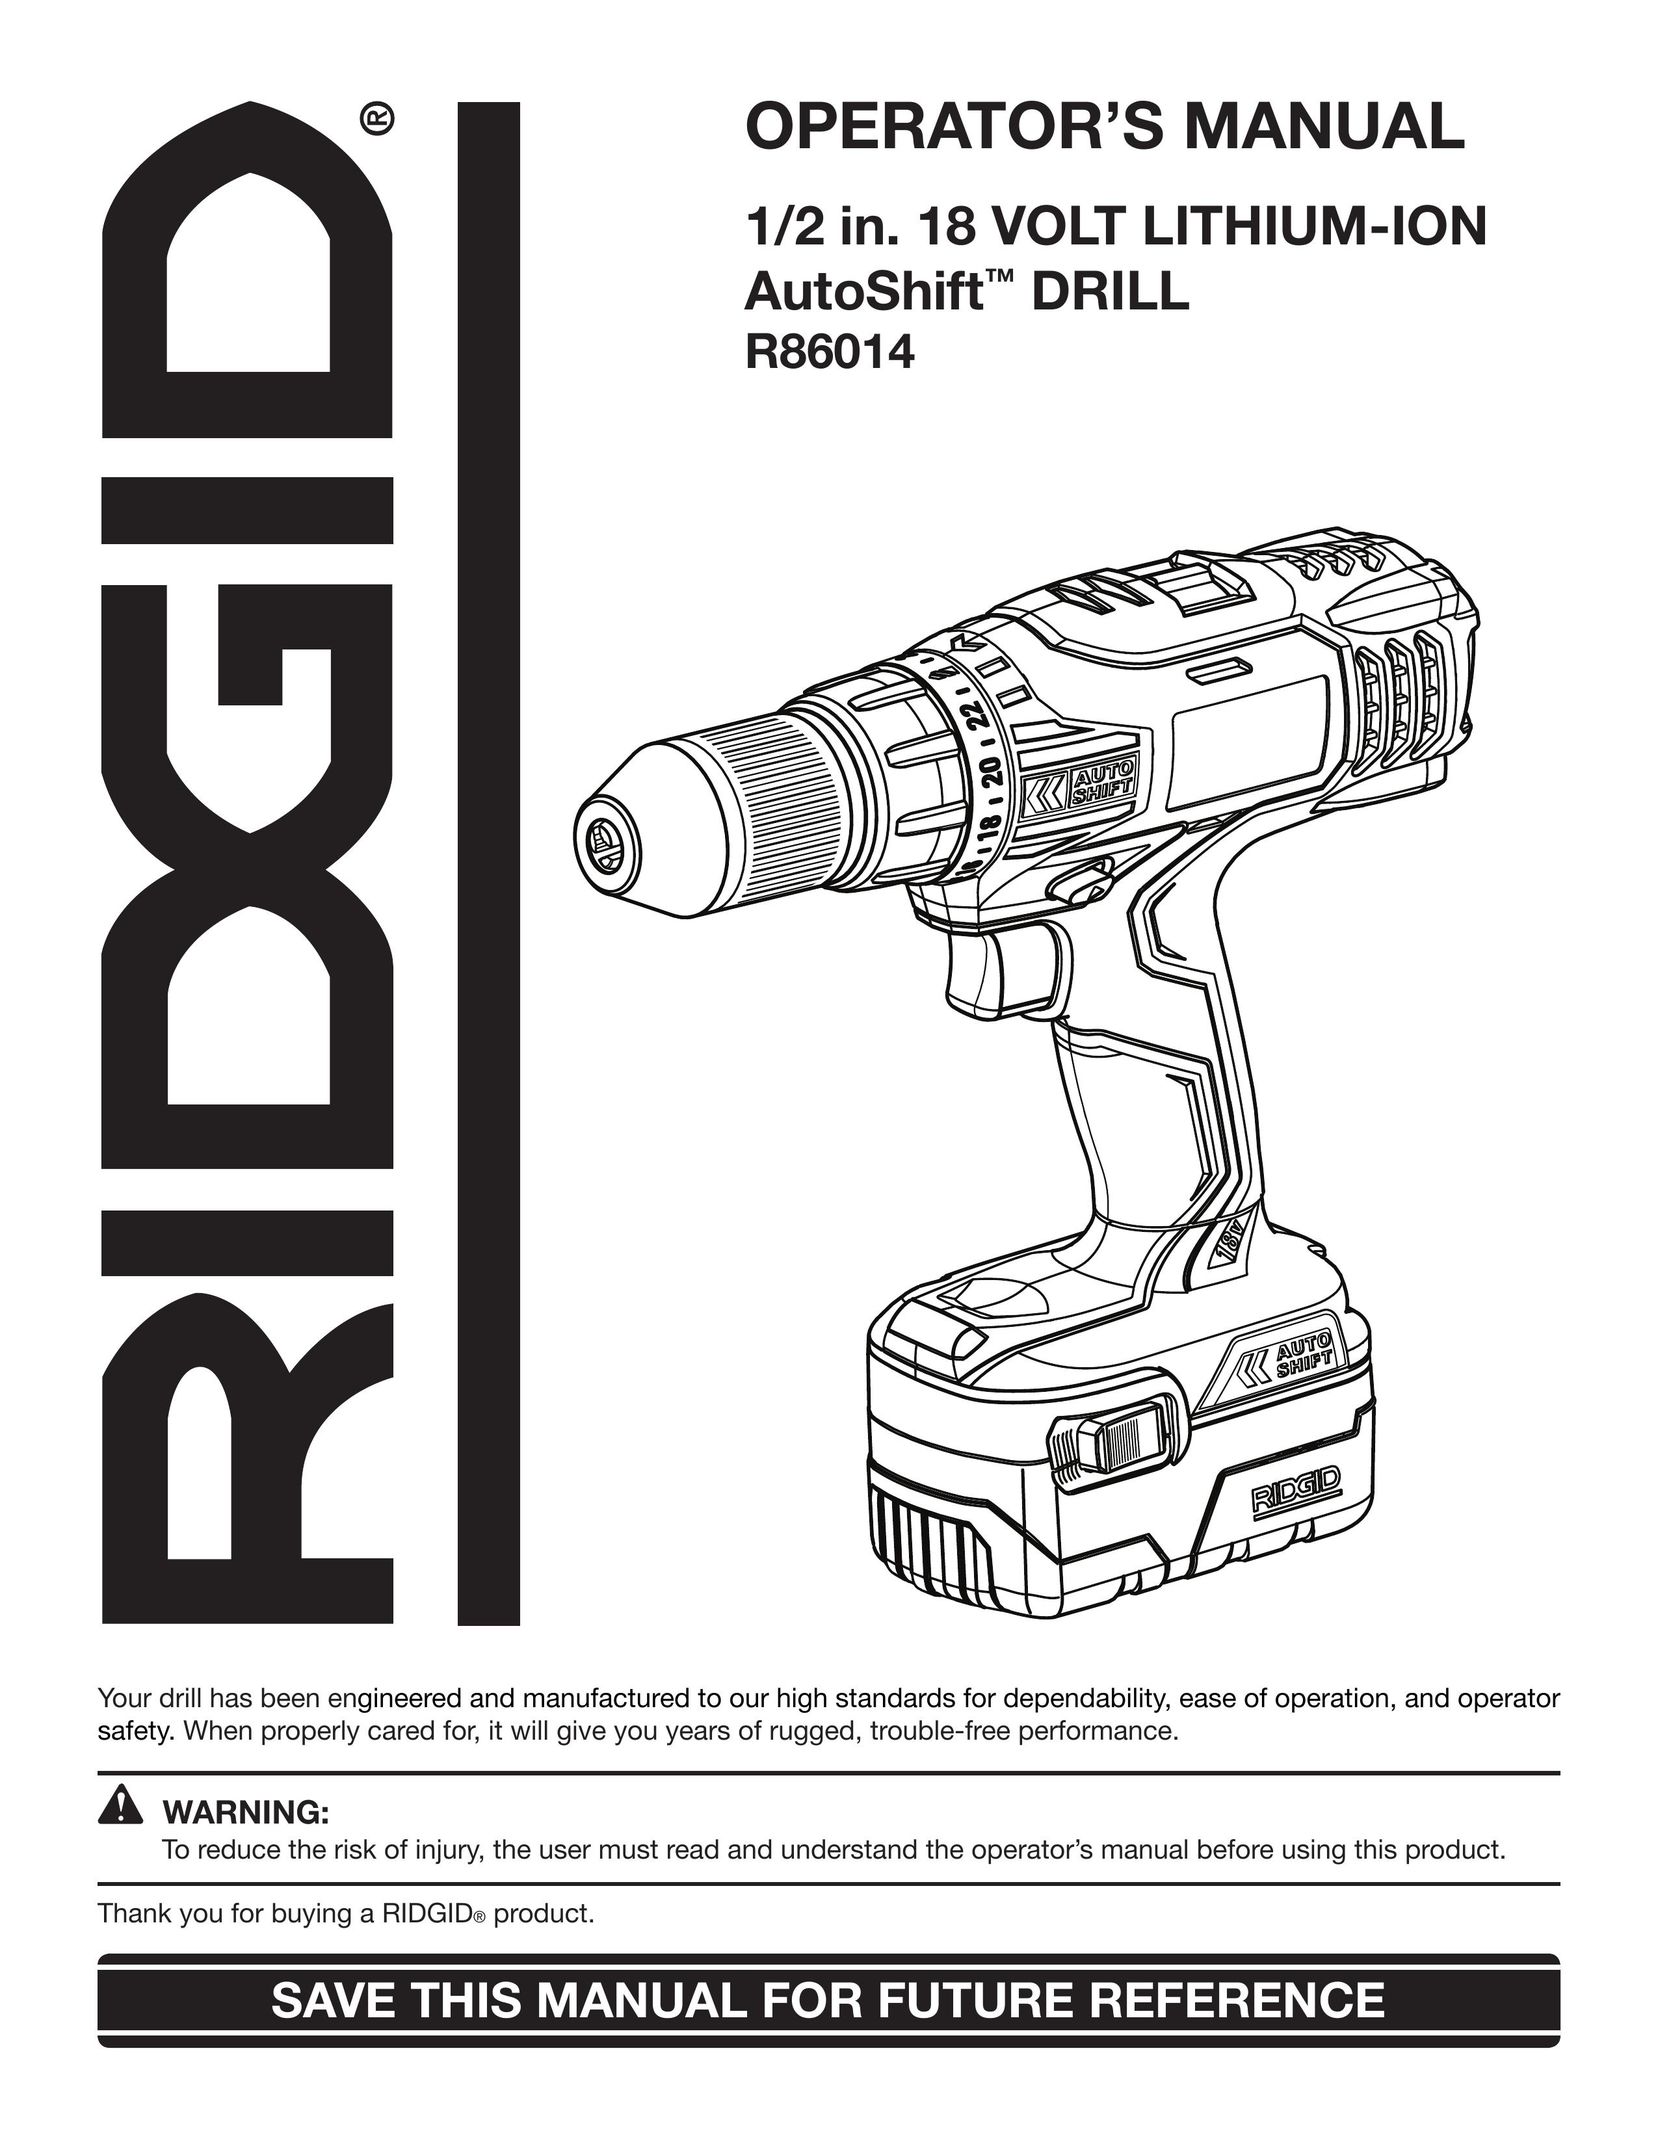 RIDGID R86014 Cordless Drill User Manual